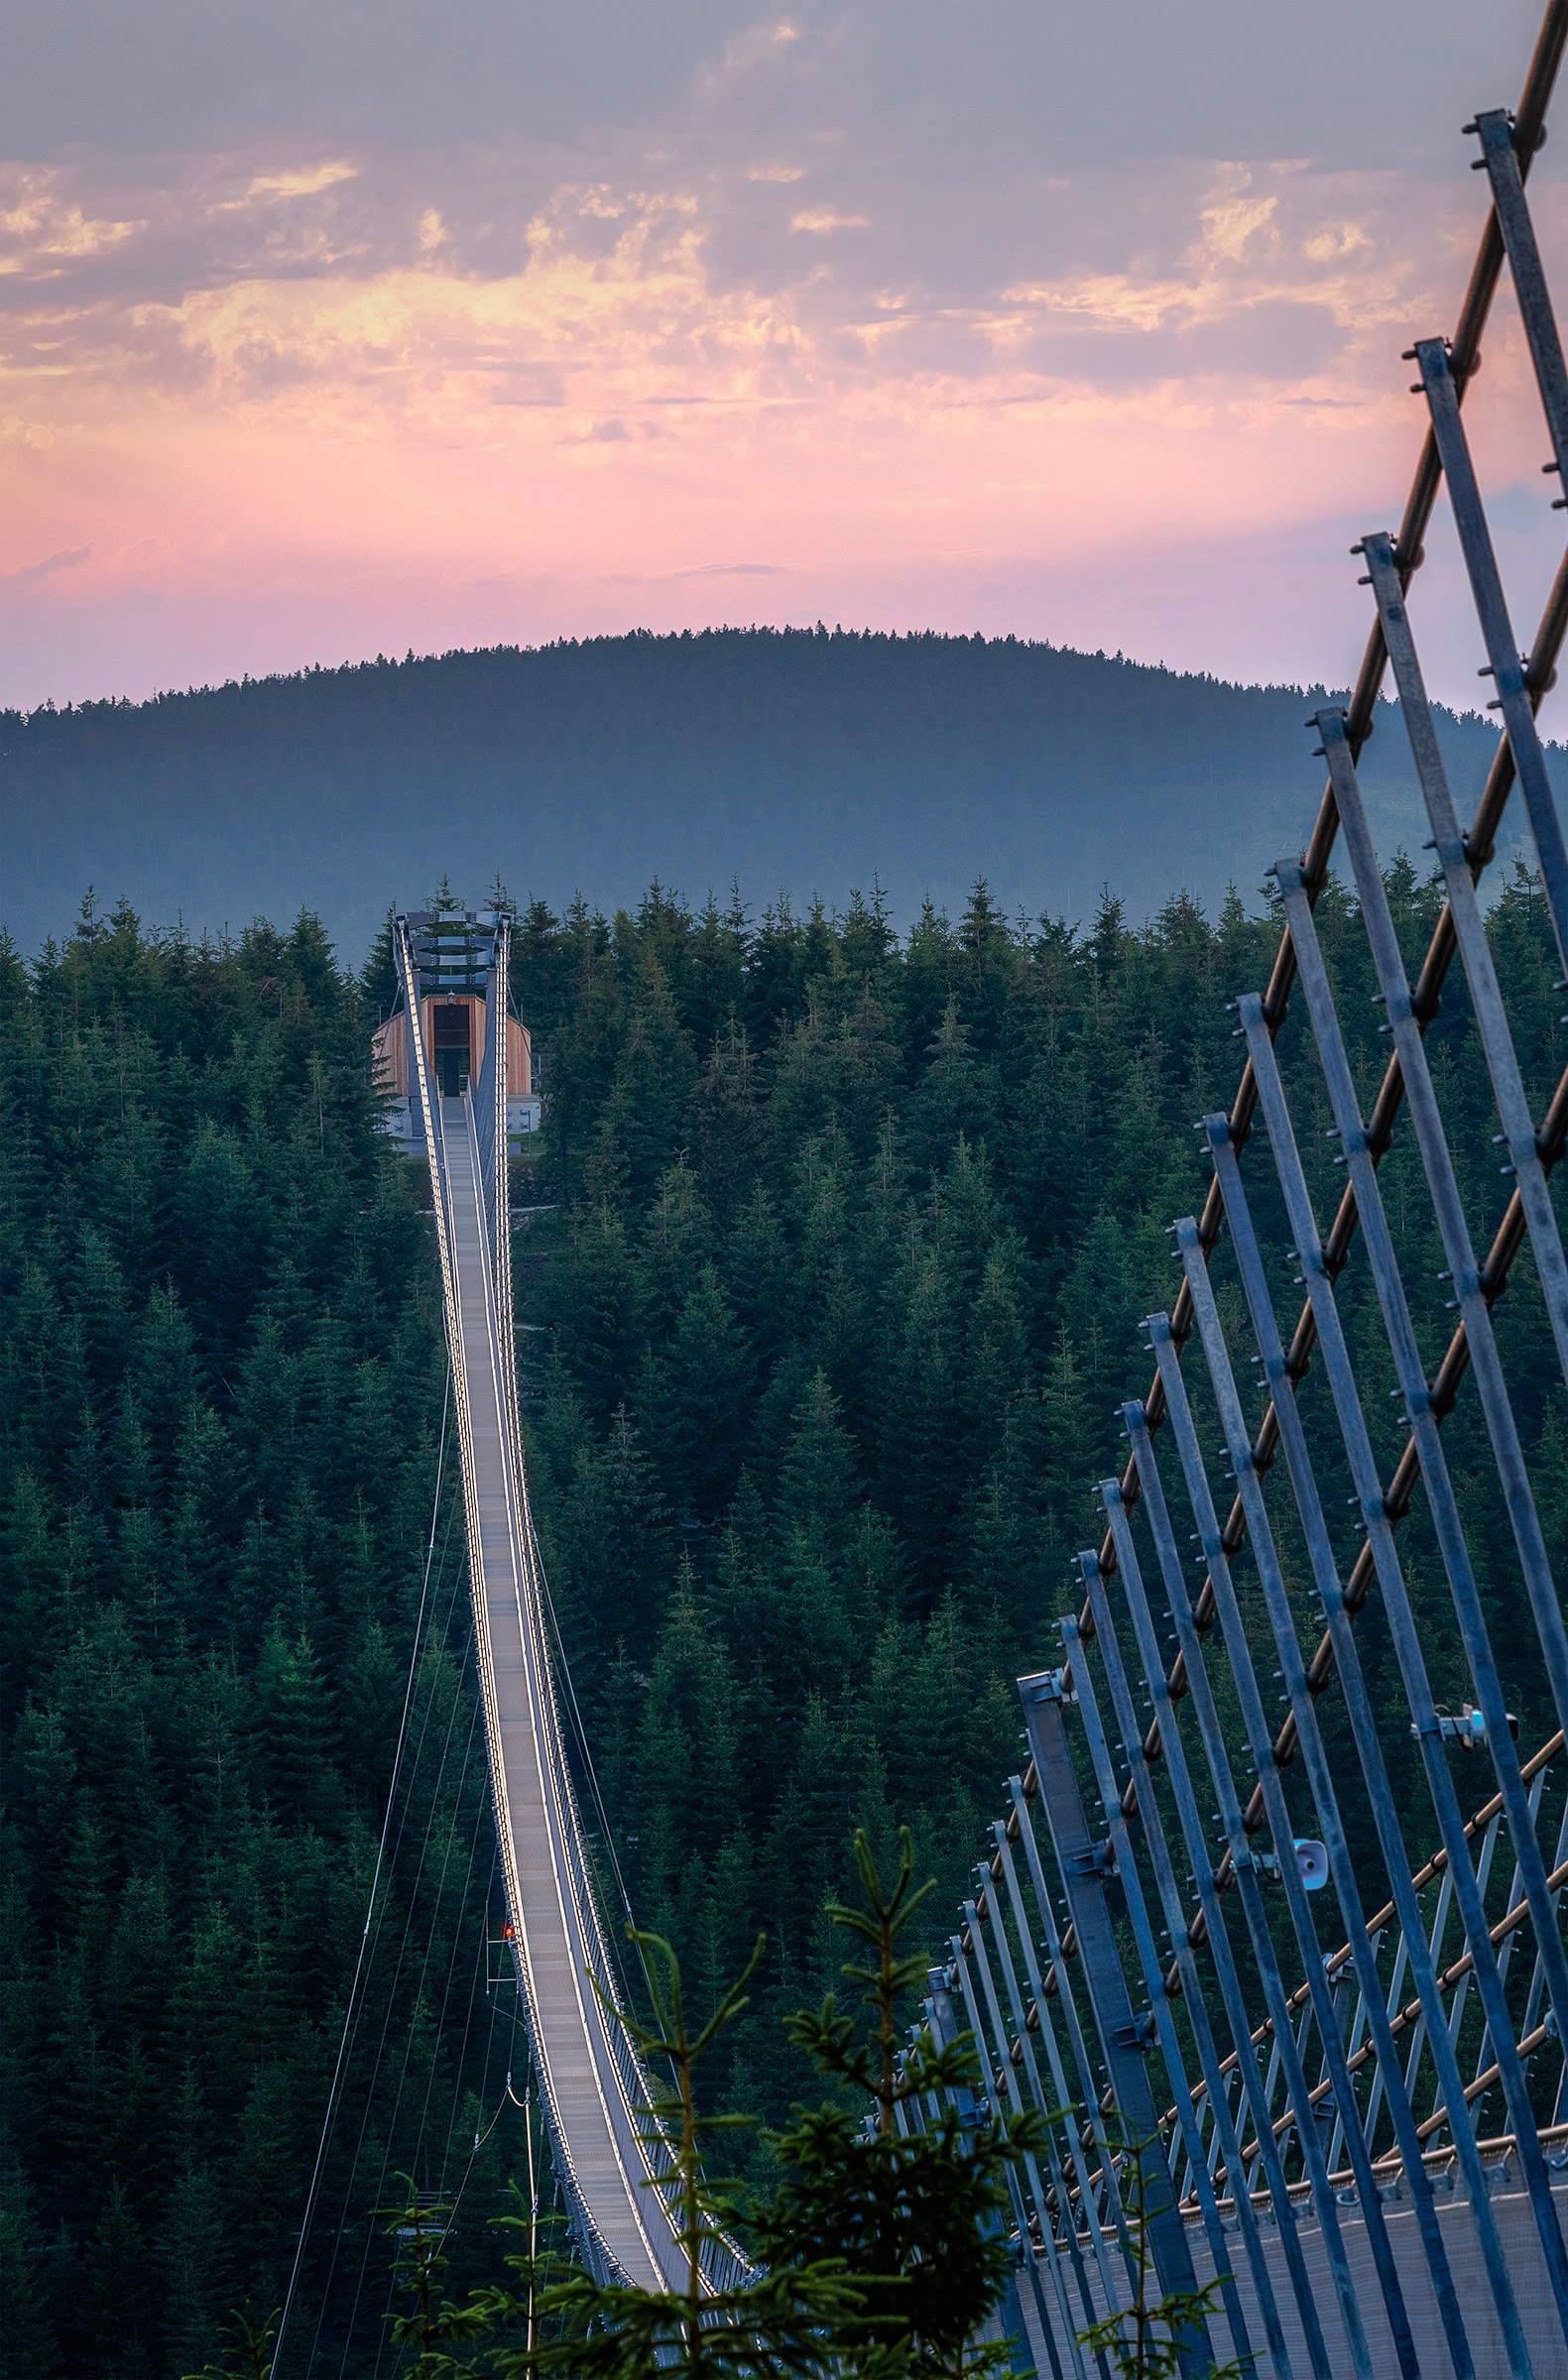 Sky Bridge 721 at the Dolni Morava vacation resort in Czech Republic. (Atila Martins for TIME)